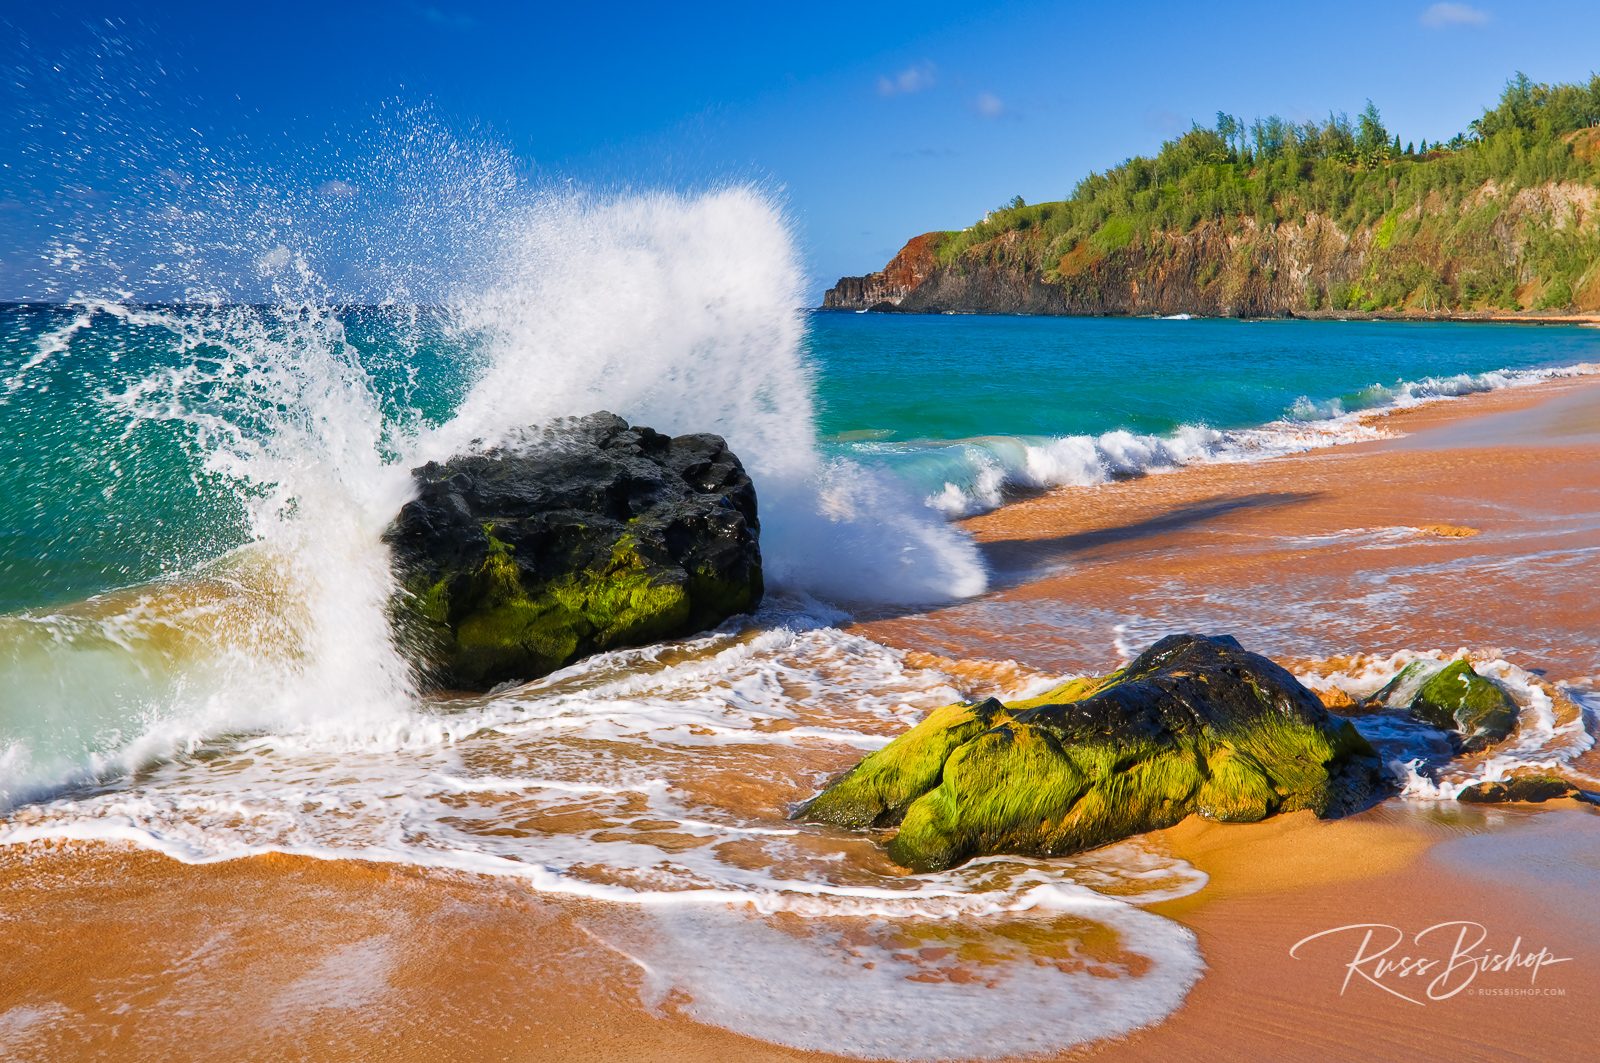 Surf crashing on rocks at Secret Beach, Kauai, Hawaii 